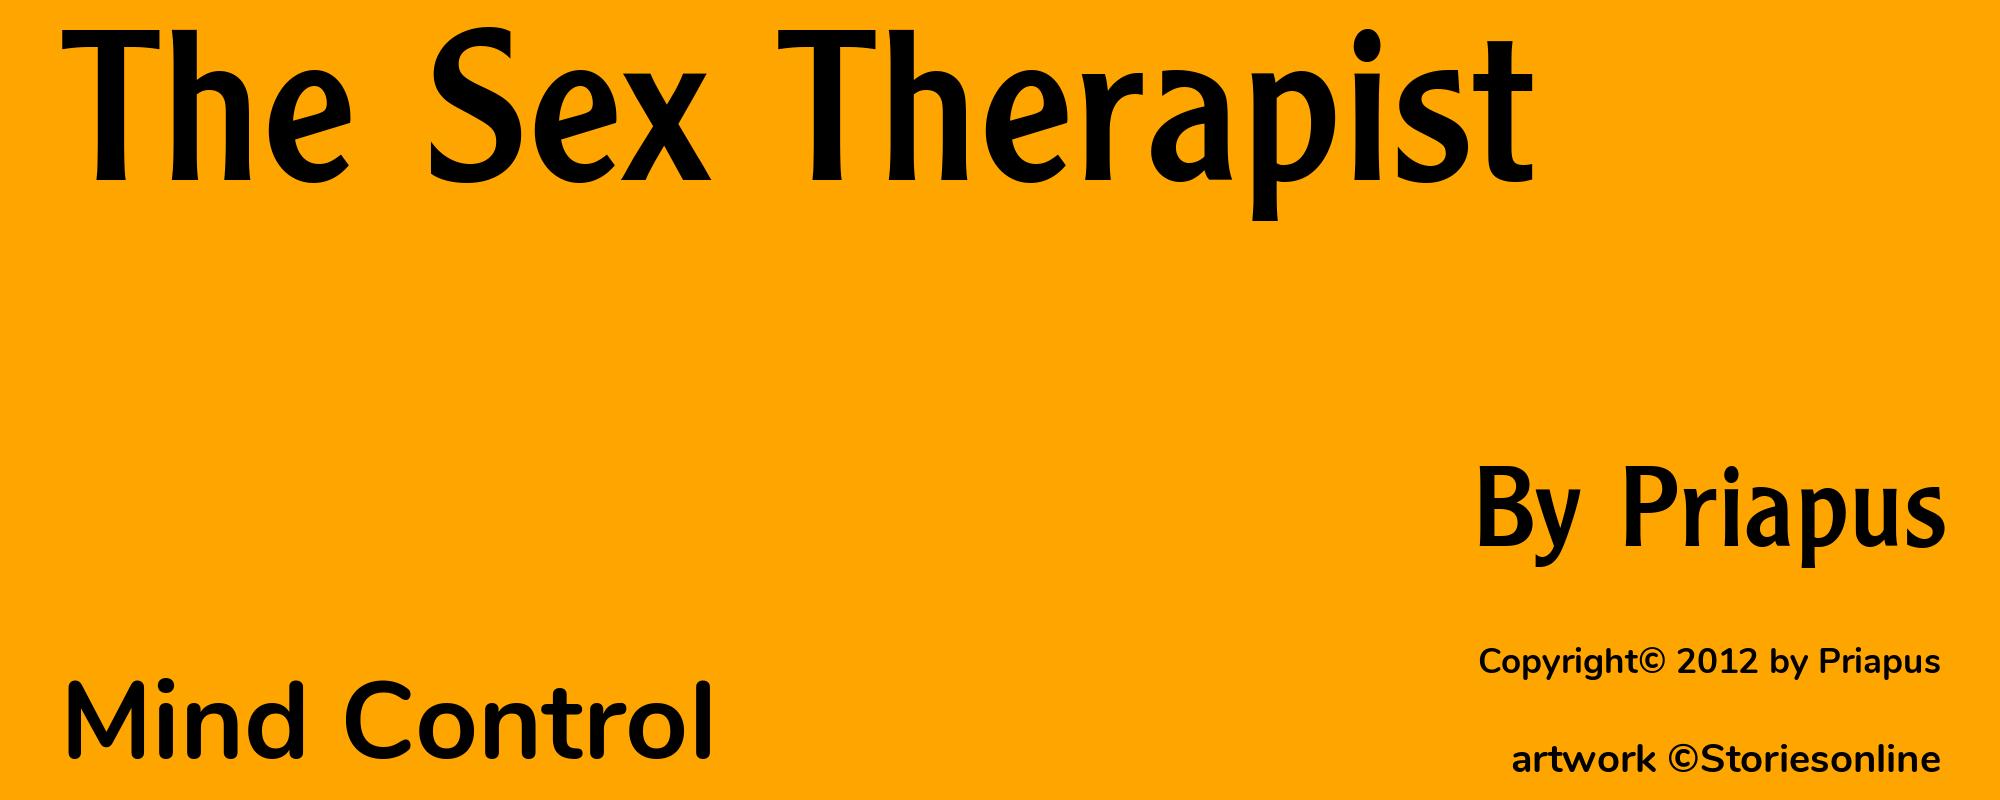 The Sex Therapist - Cover